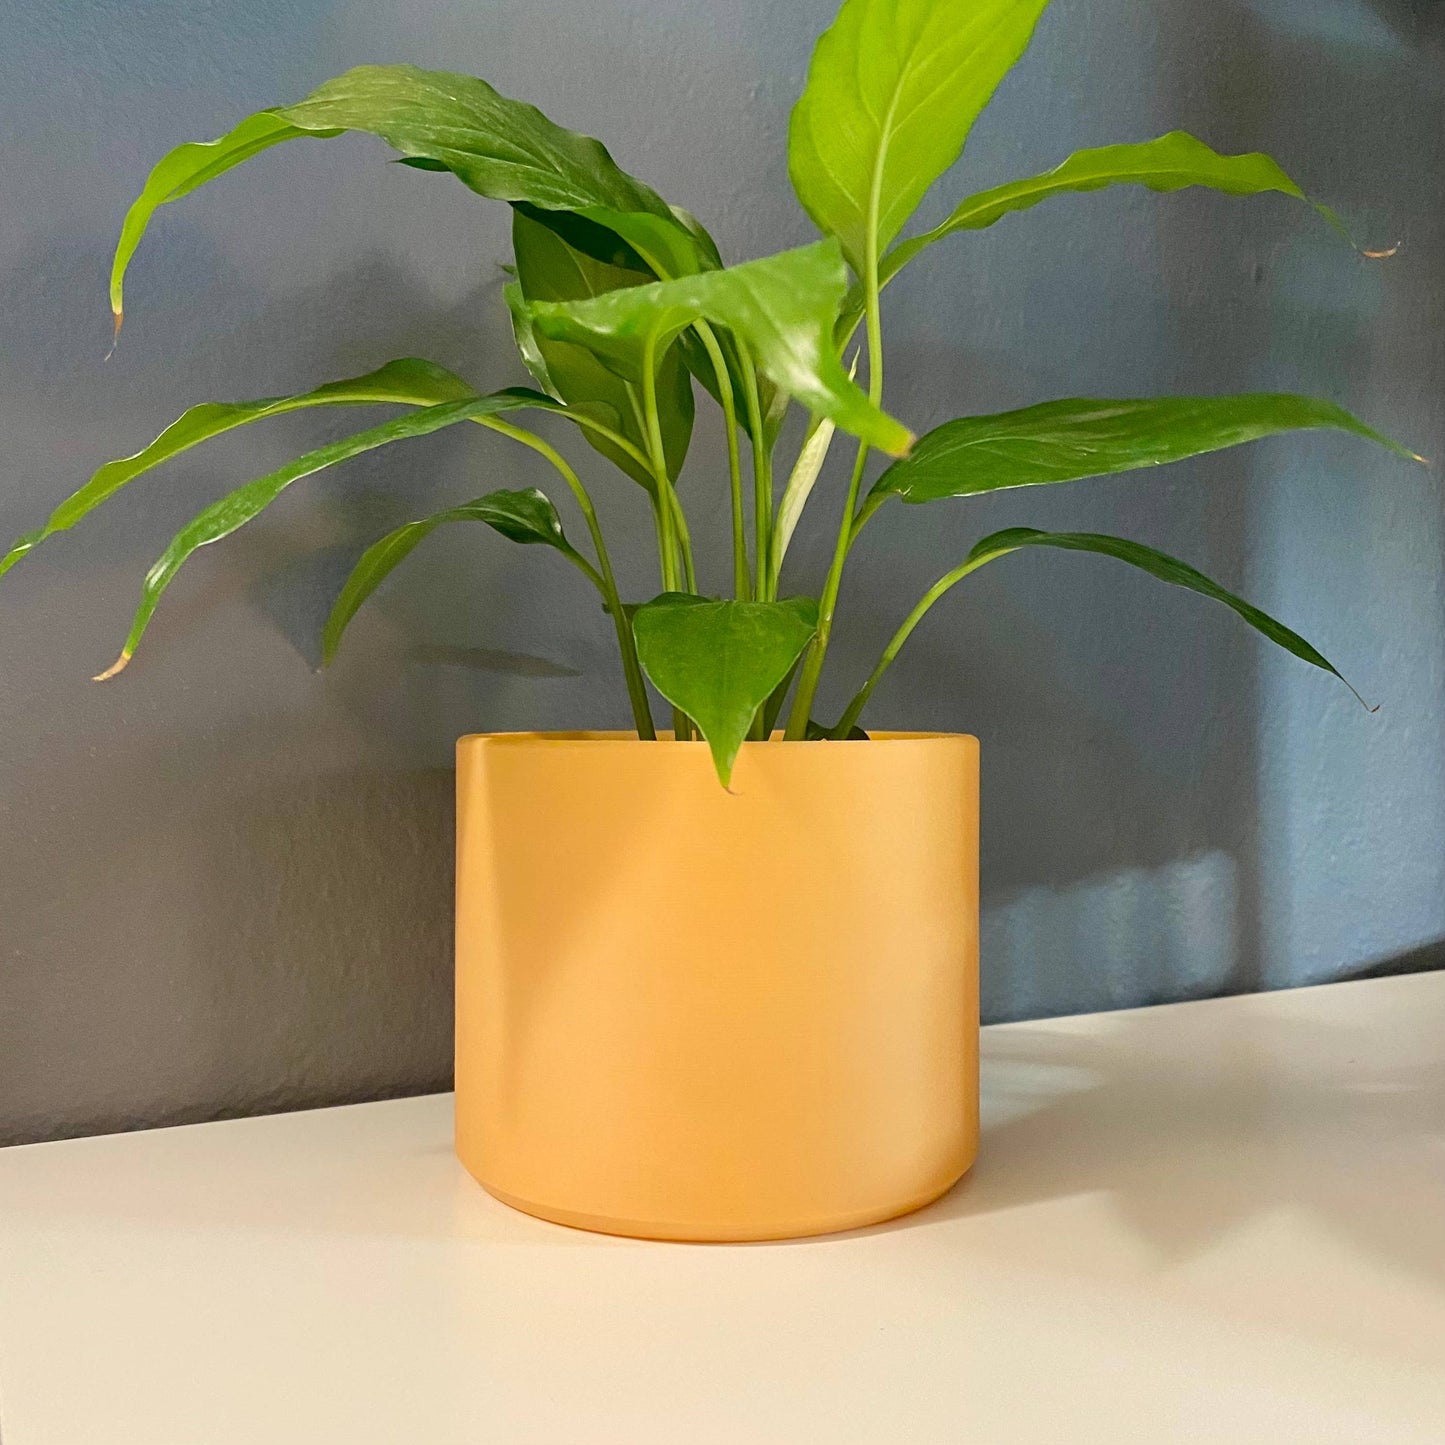 3D Printed 4in. Planter Pot - Indoor Planter Pot: Orange Dreamsicle